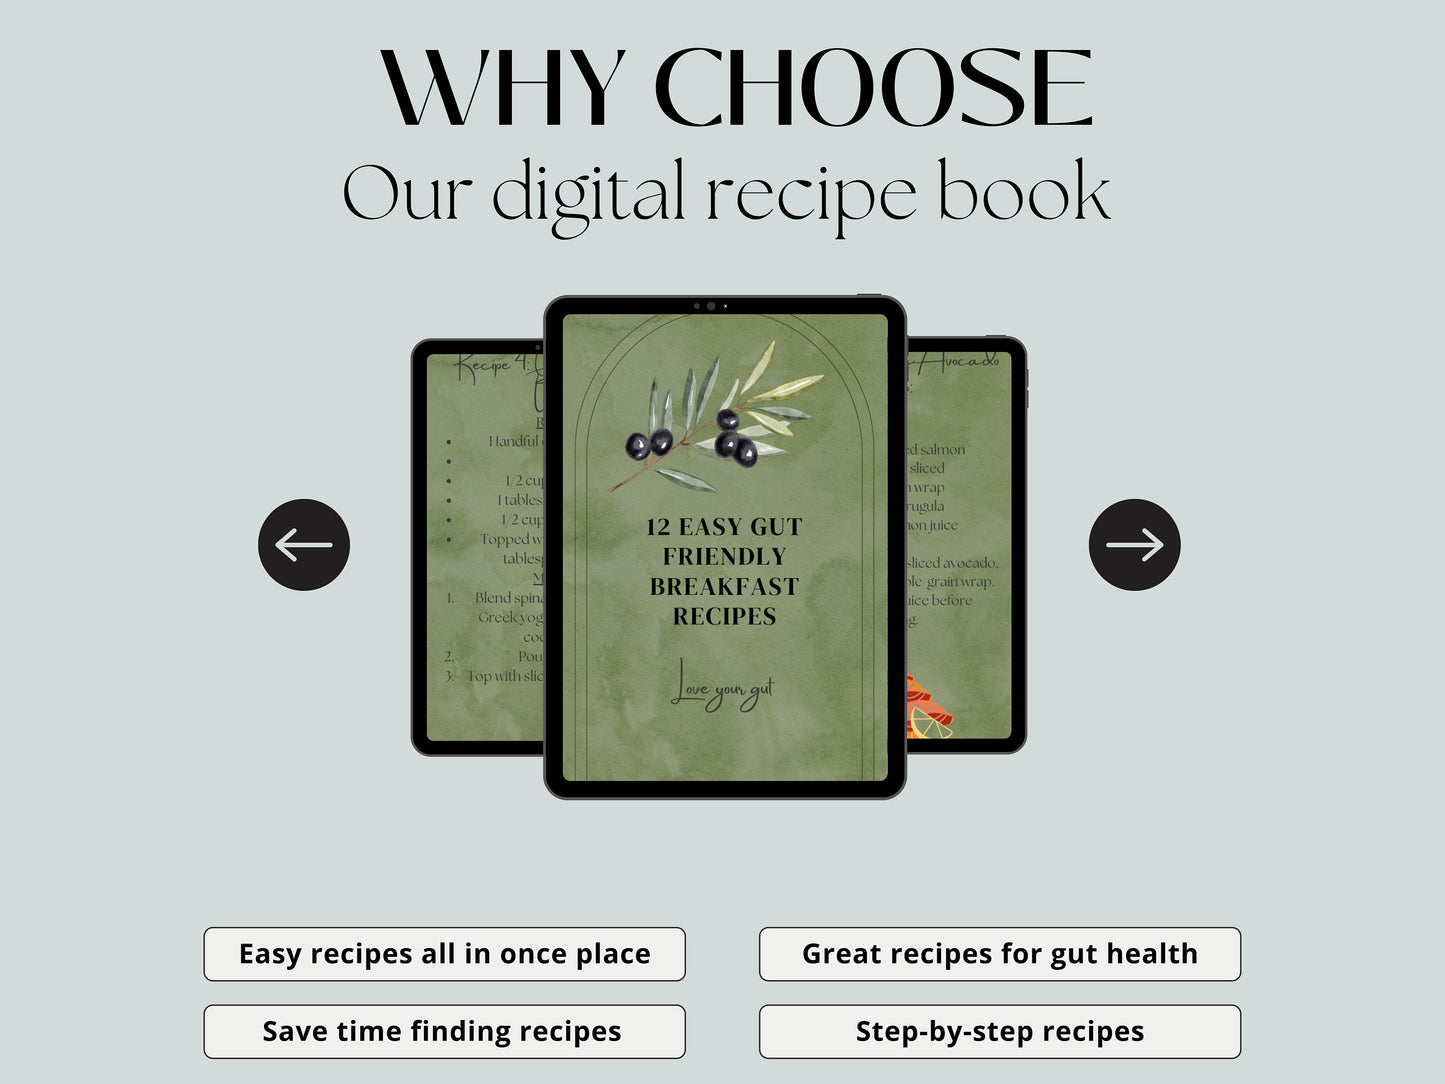 Gut Healthy recipes & meal plans - Green - Digital